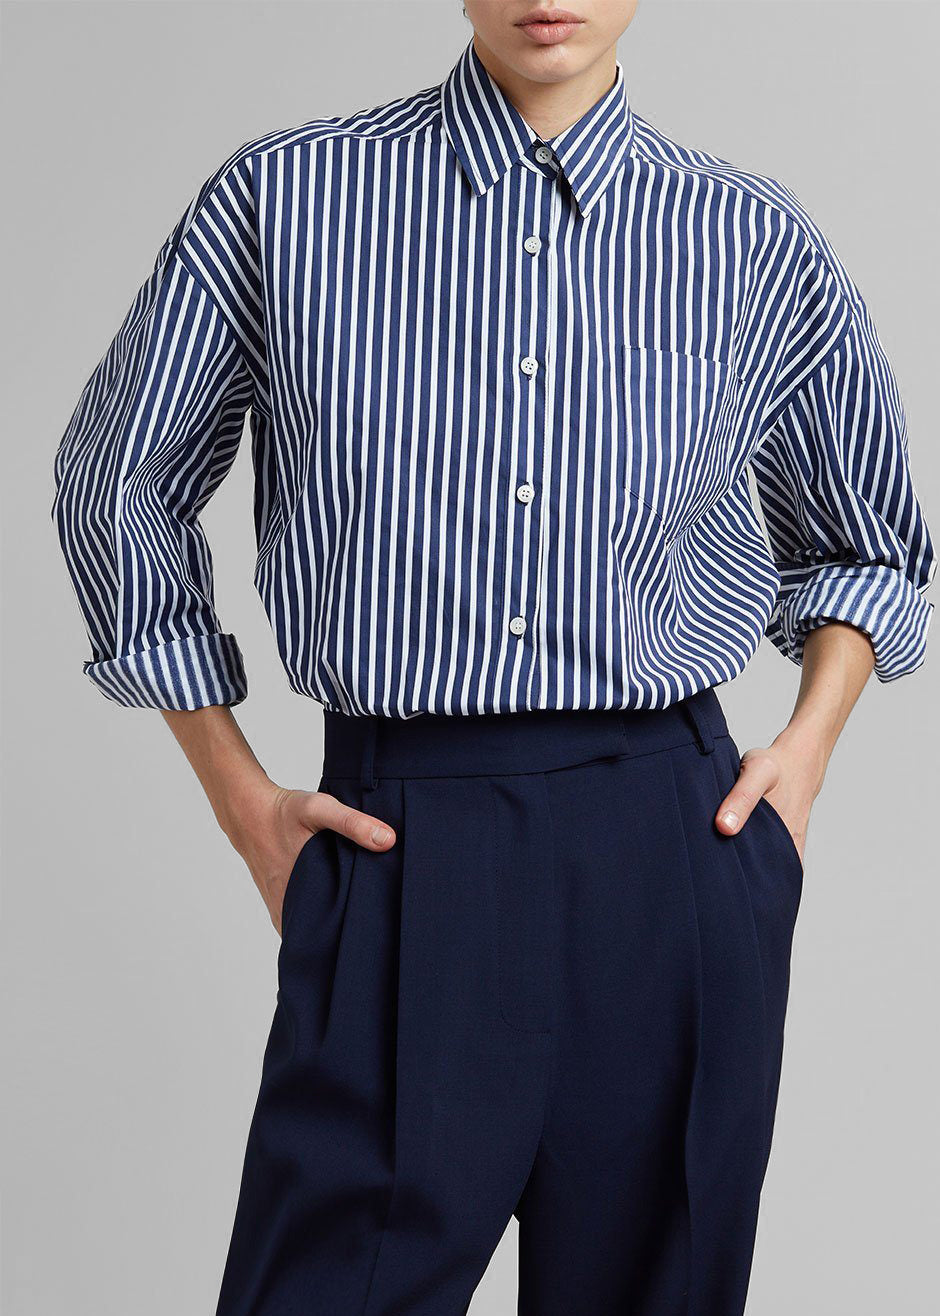 Melody Cotton Shirt - Navy Stripe - 2